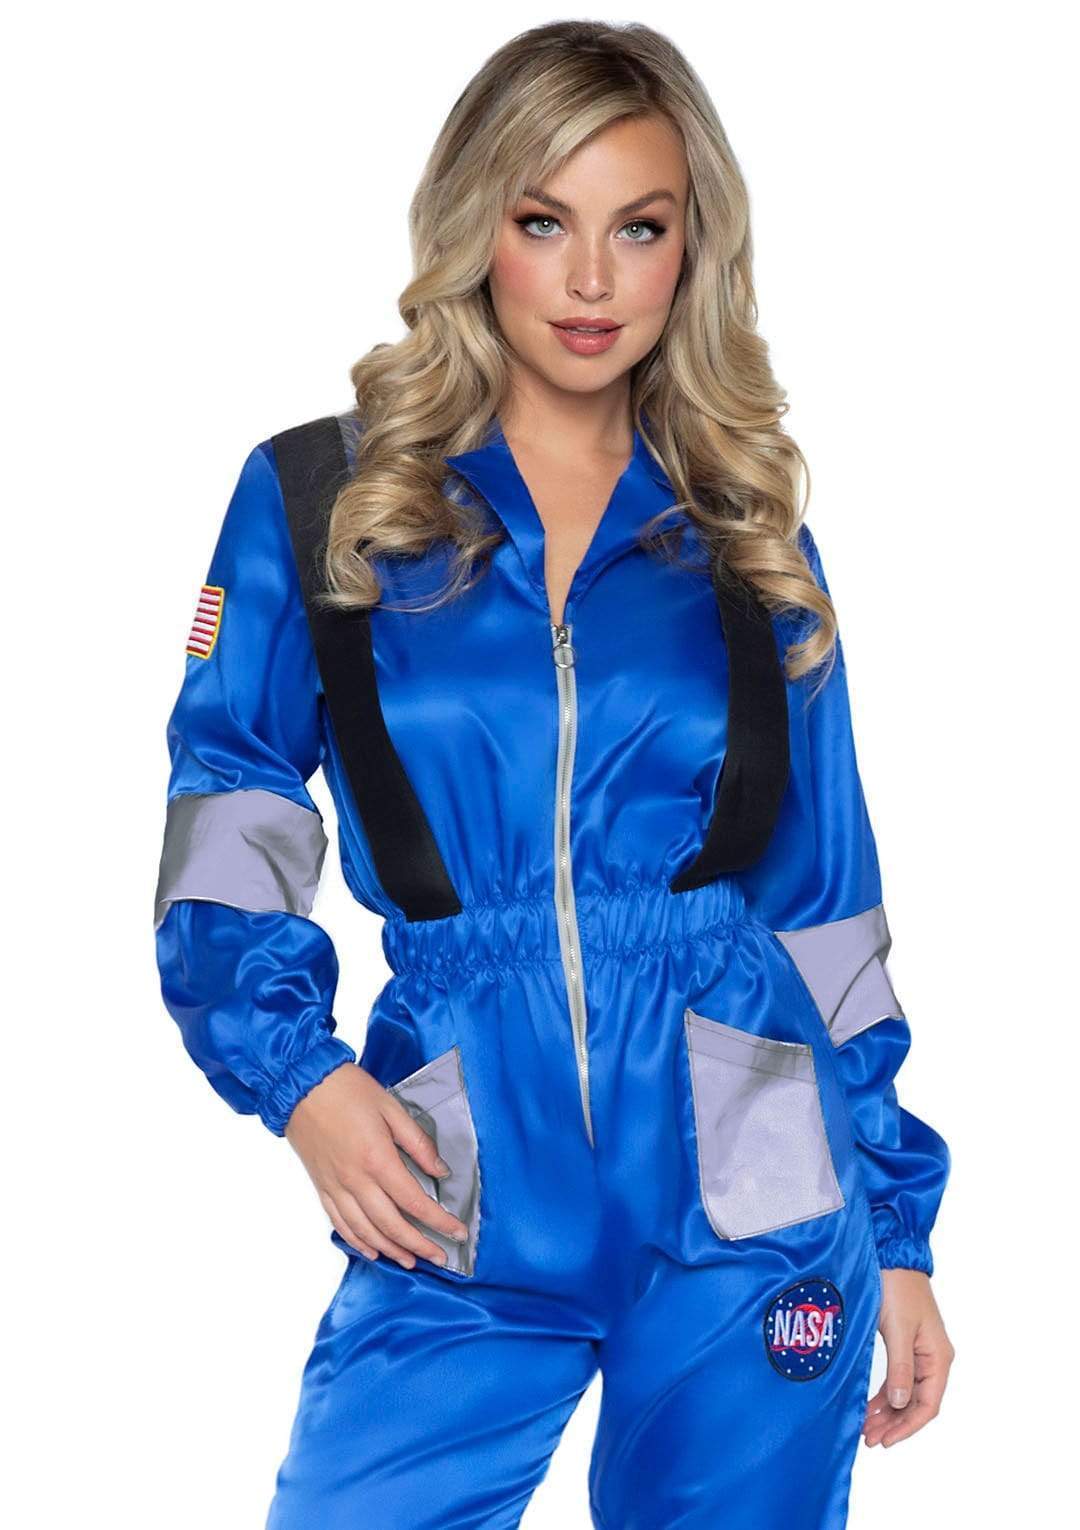 Space Explorer Jumpsuit Costume